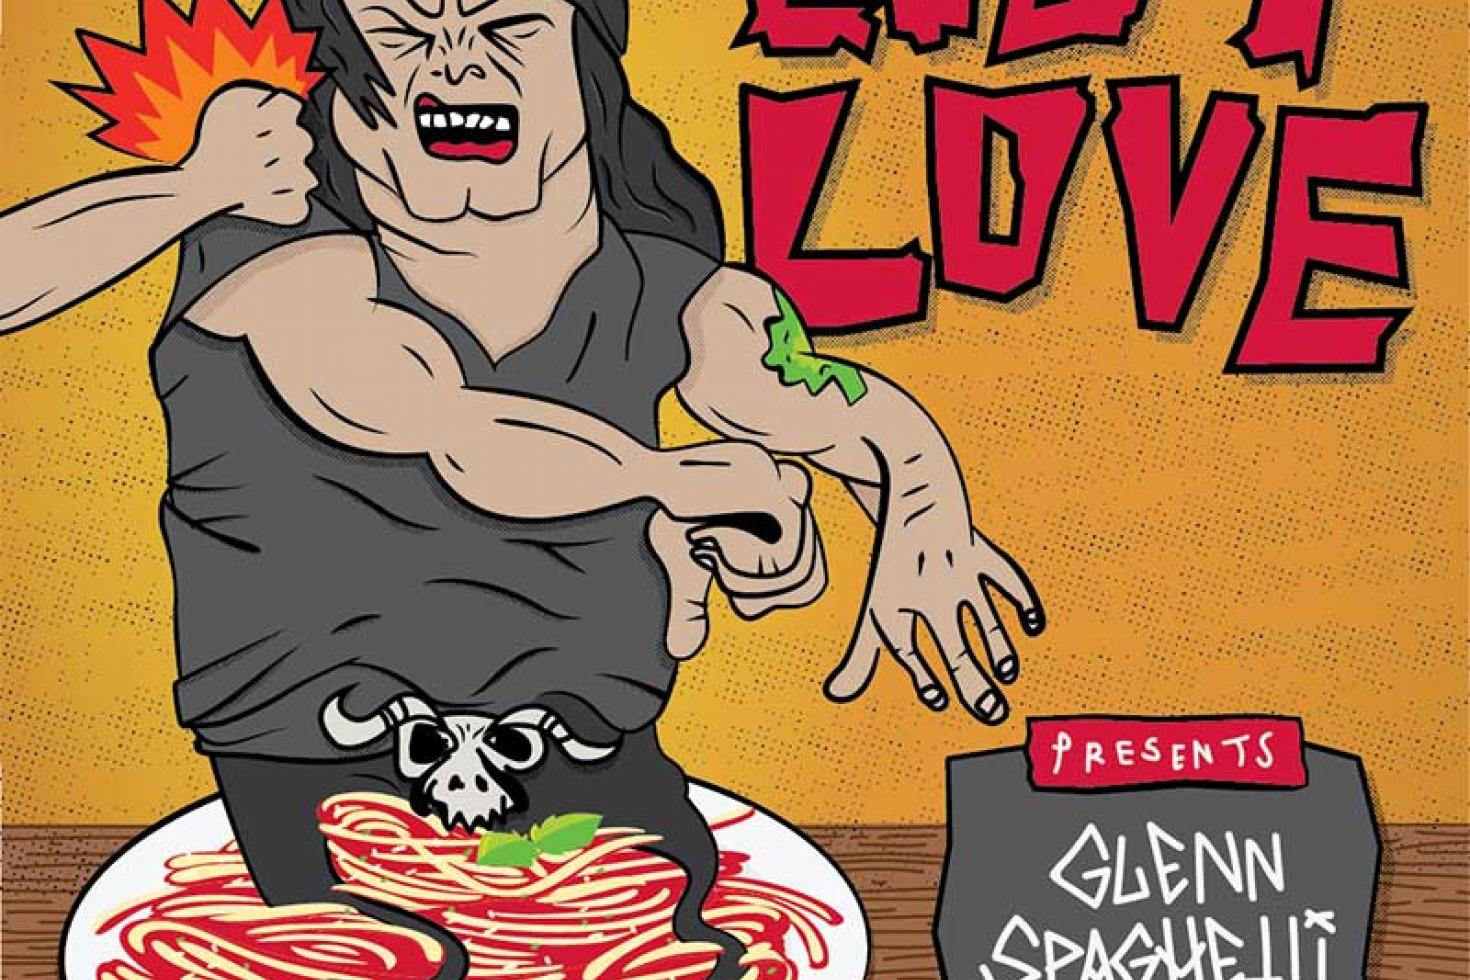 Lost Love releases new EP 'Glenn Spaghetti Legs'